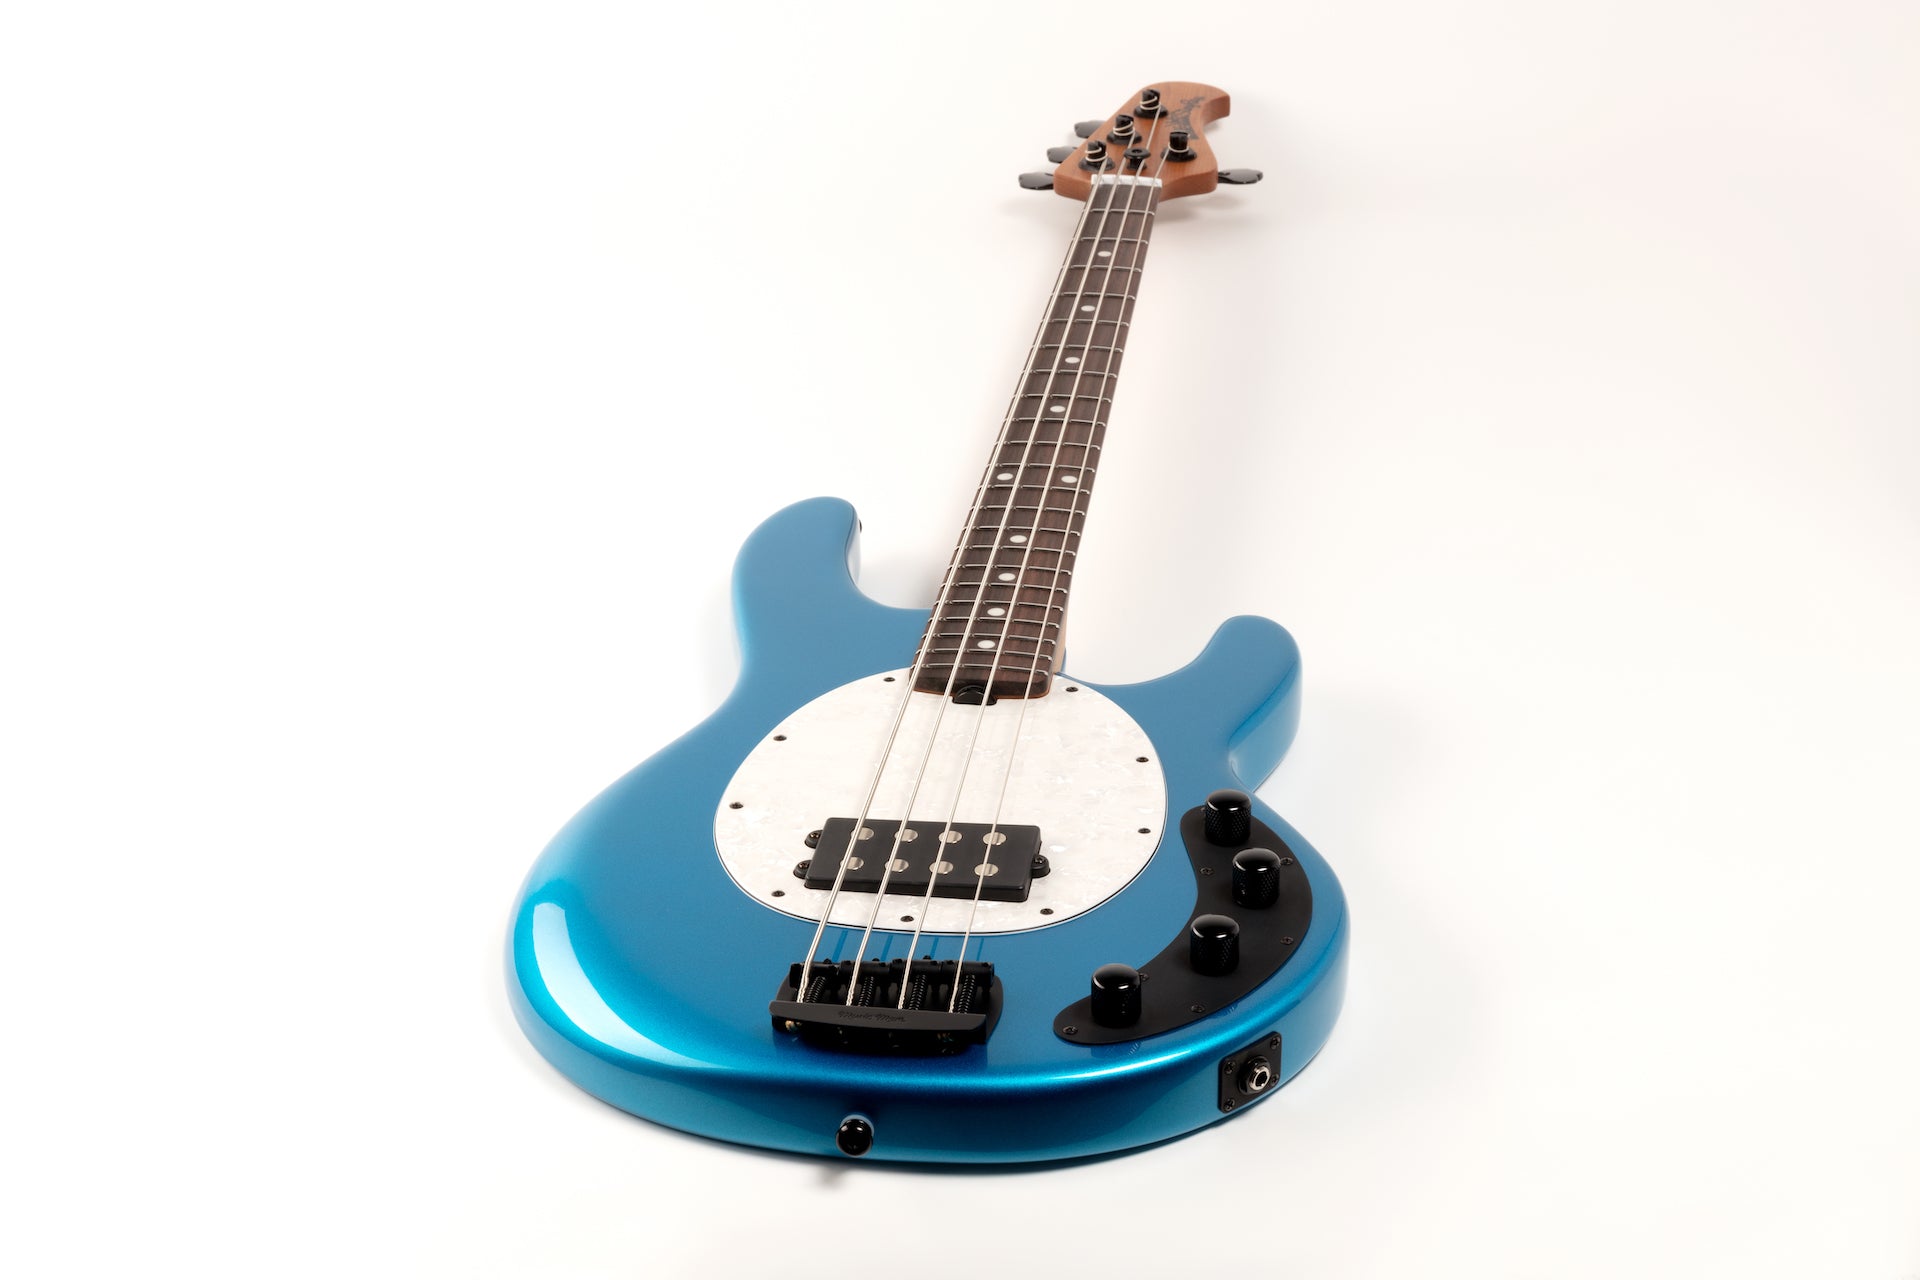 Ernie Ball Music Man StingRay Special Bass Guitar - Speed Blue with Rosewood Fingerboard F96542 - HIENDGUITAR   Musicman bass